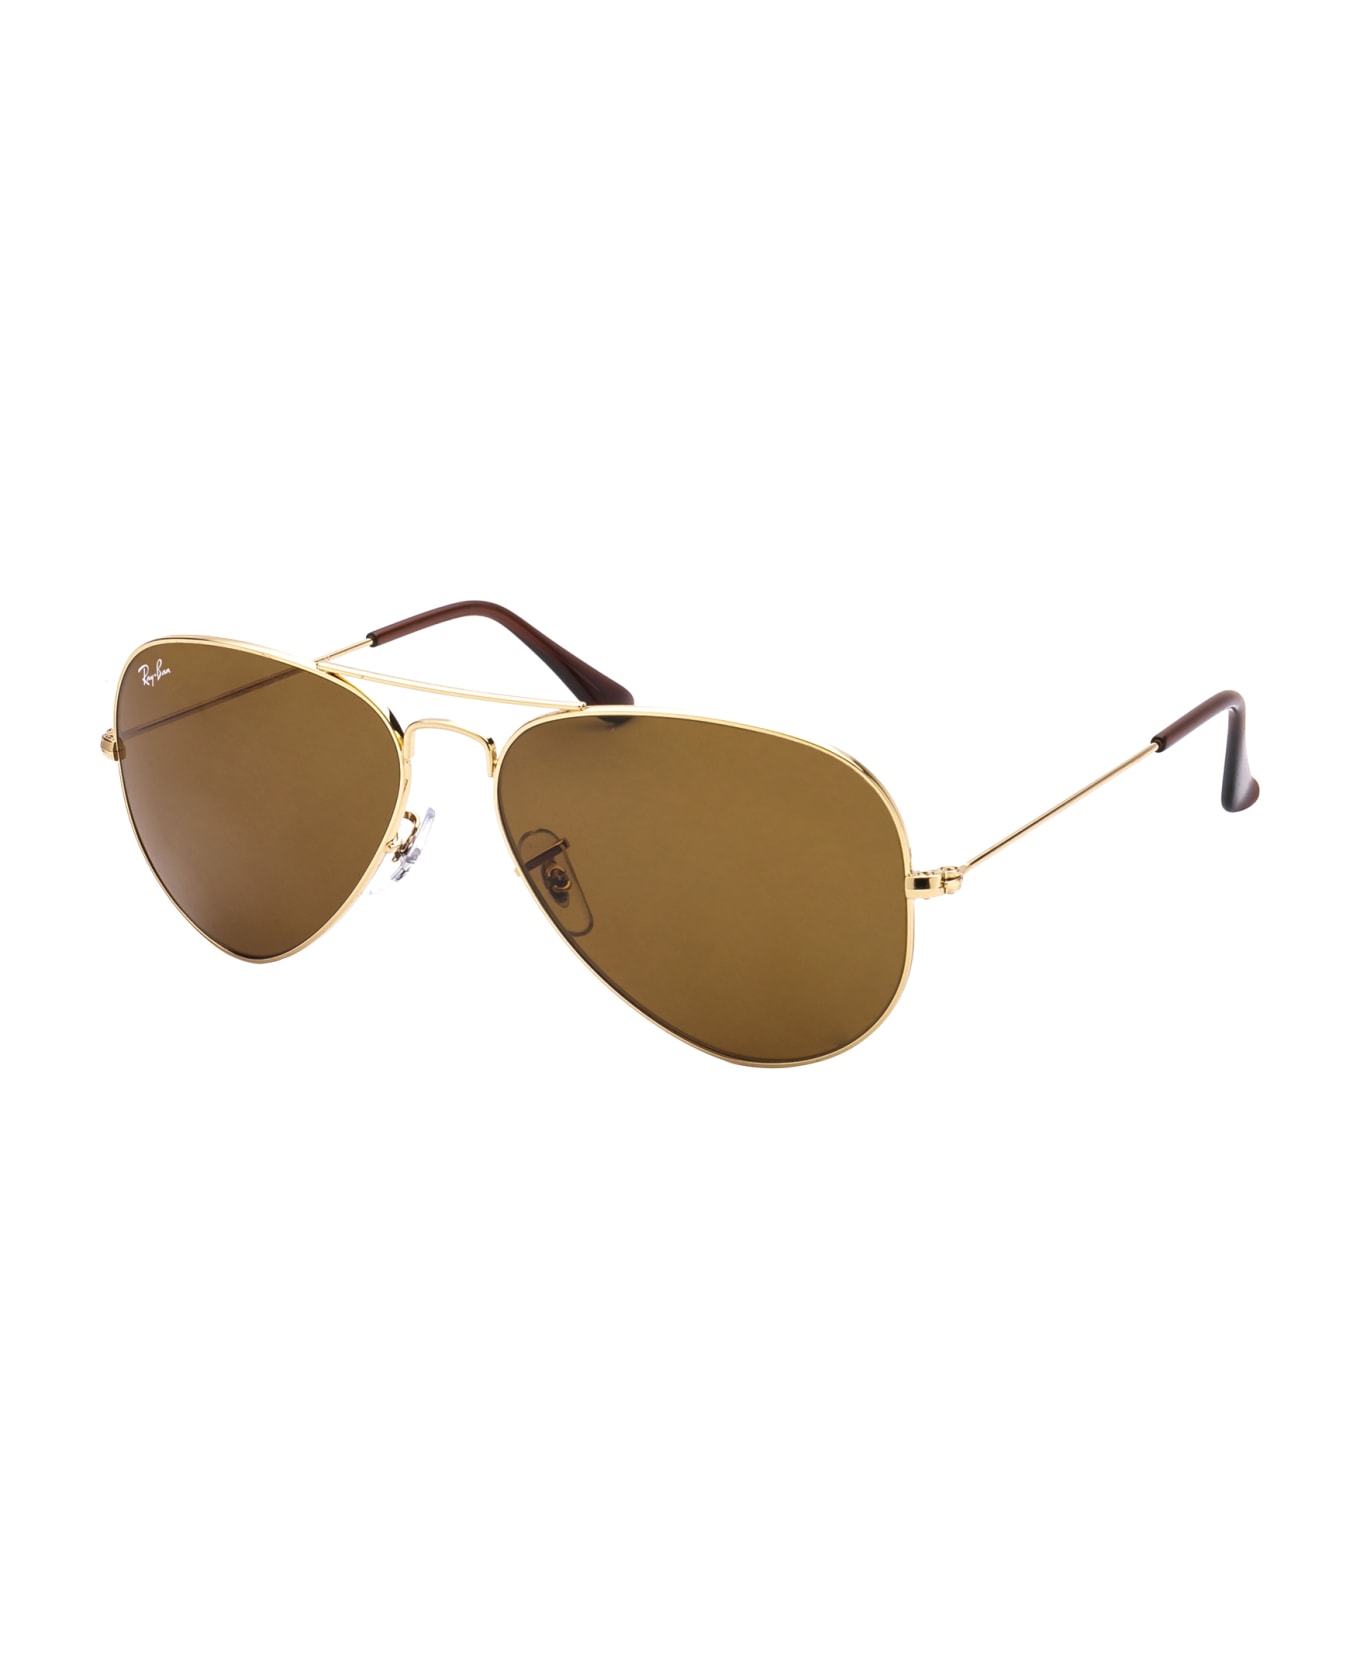 Ray-Ban Aviator Sunglasses - 001/33 GOLD